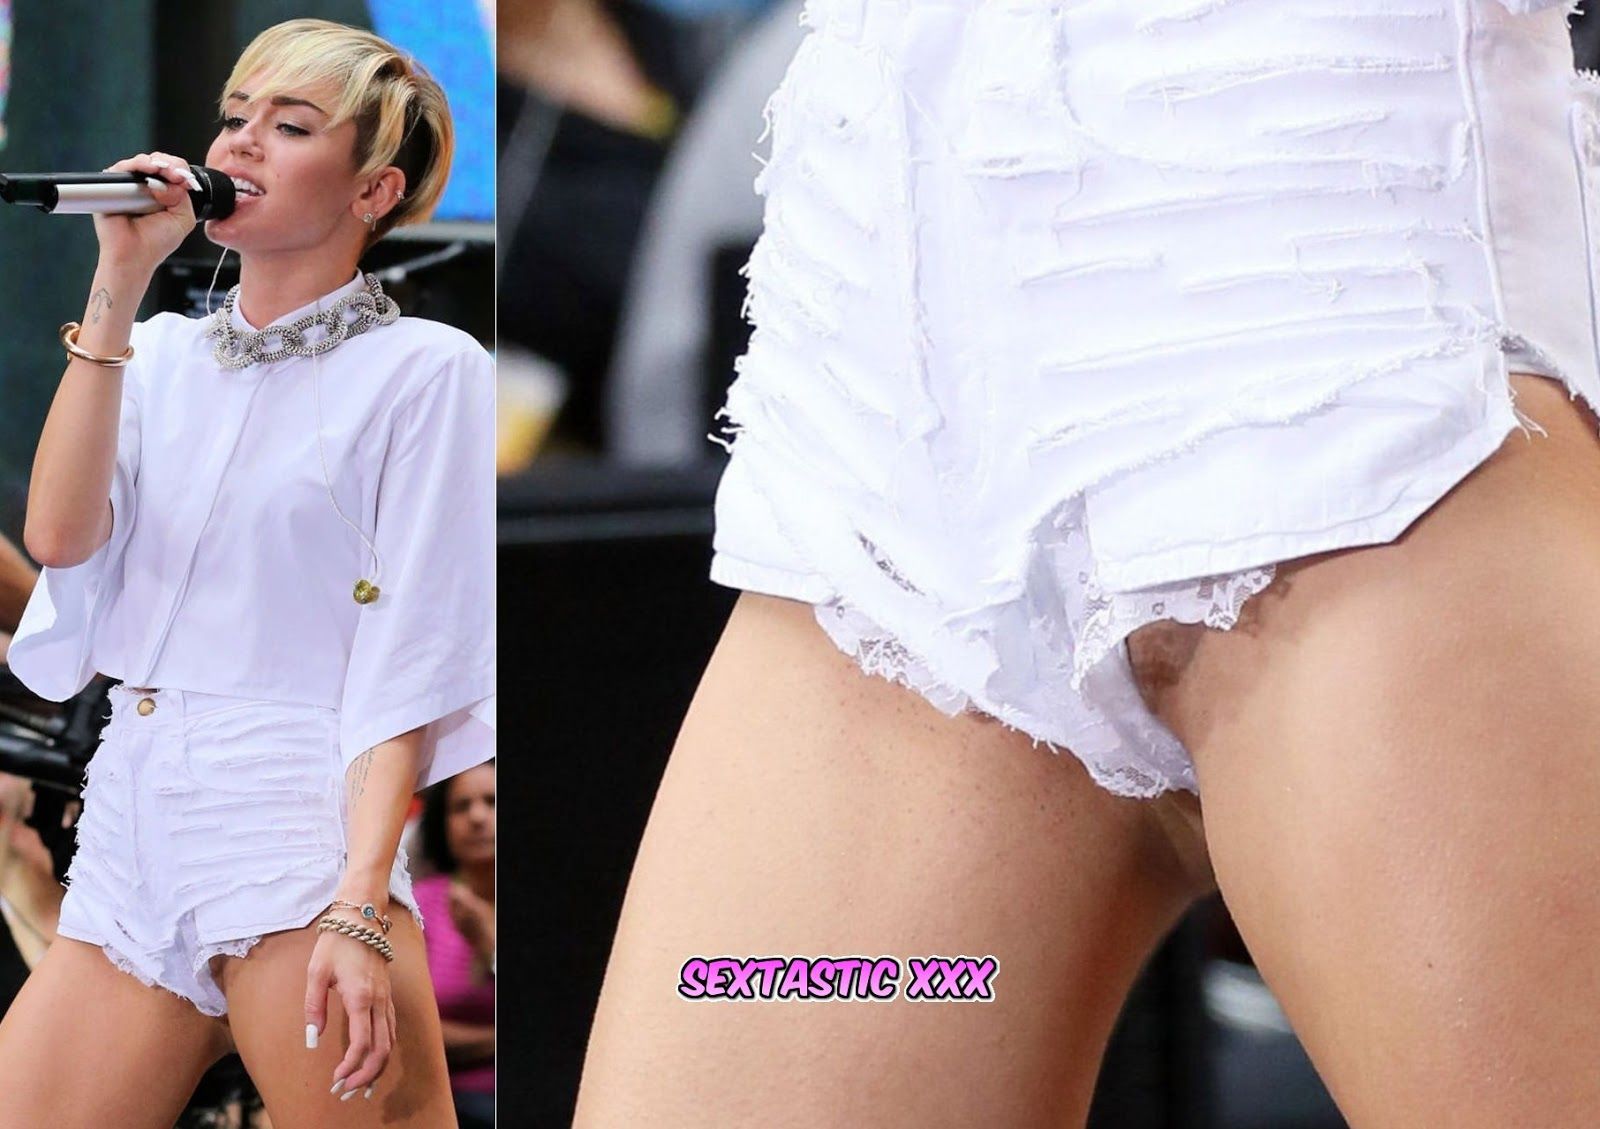 Miley Cyrus Upskirt.